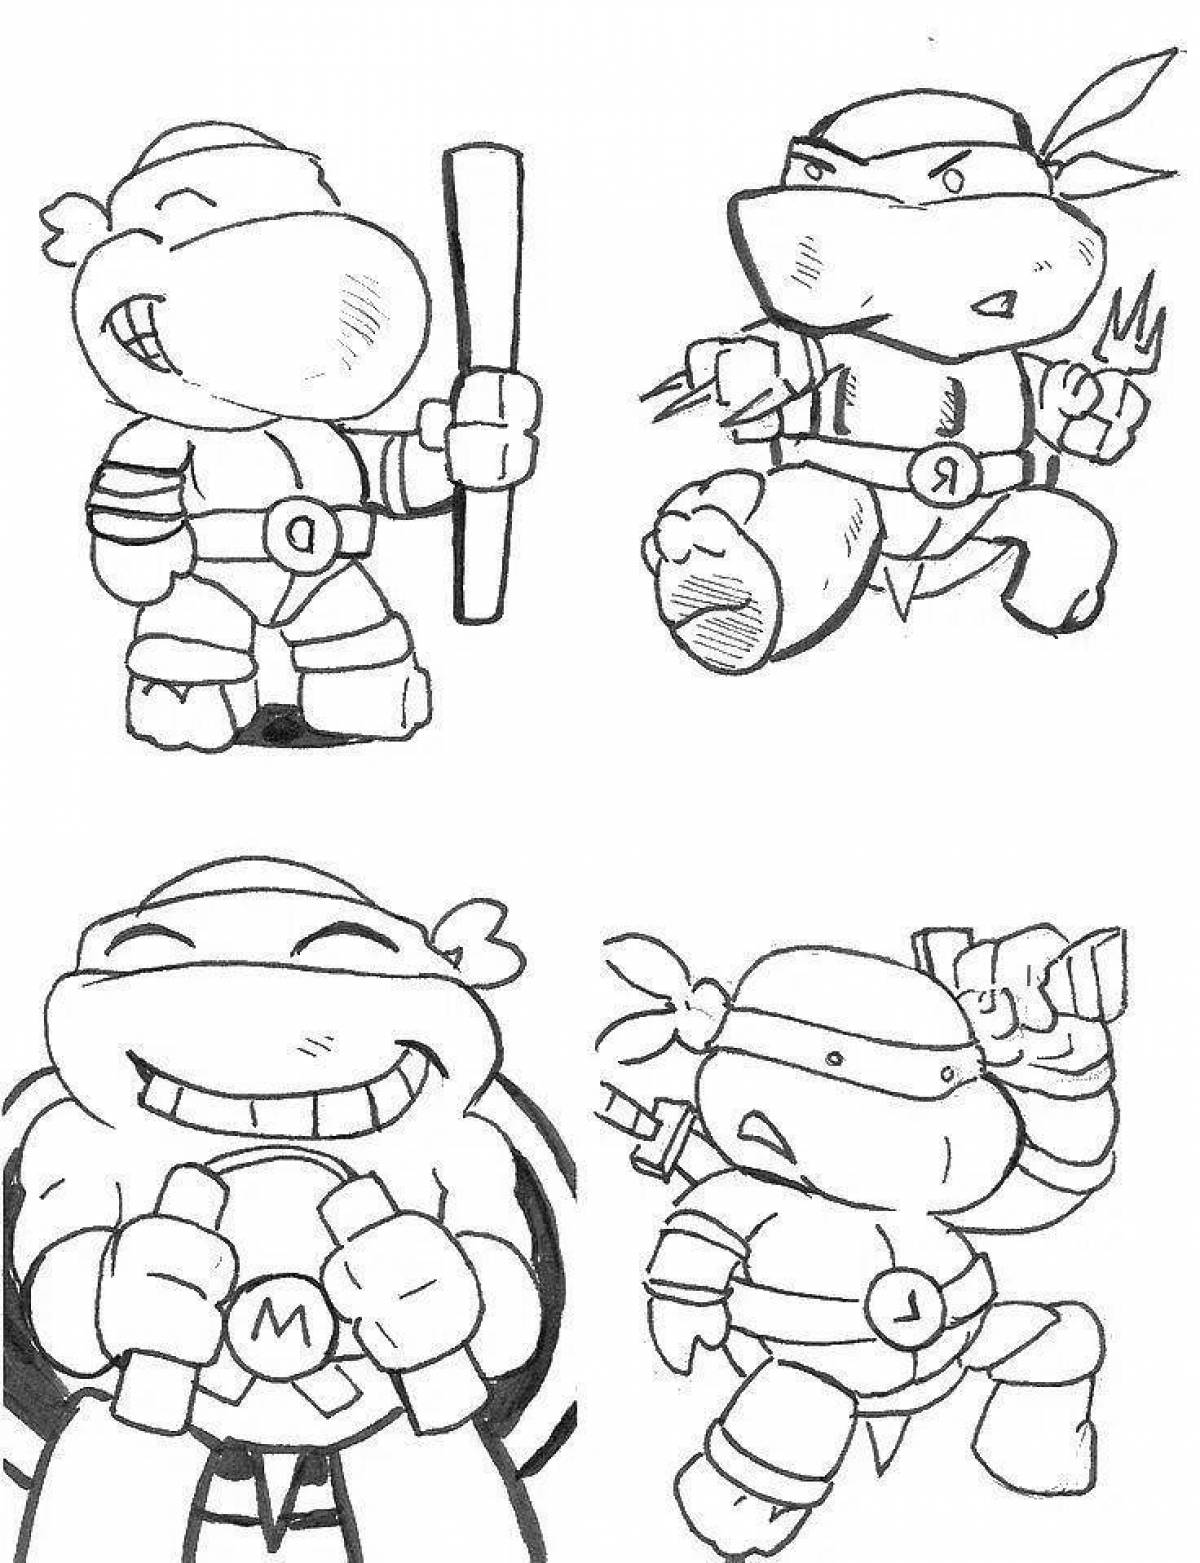 Funny ninja turtles evolution coloring book